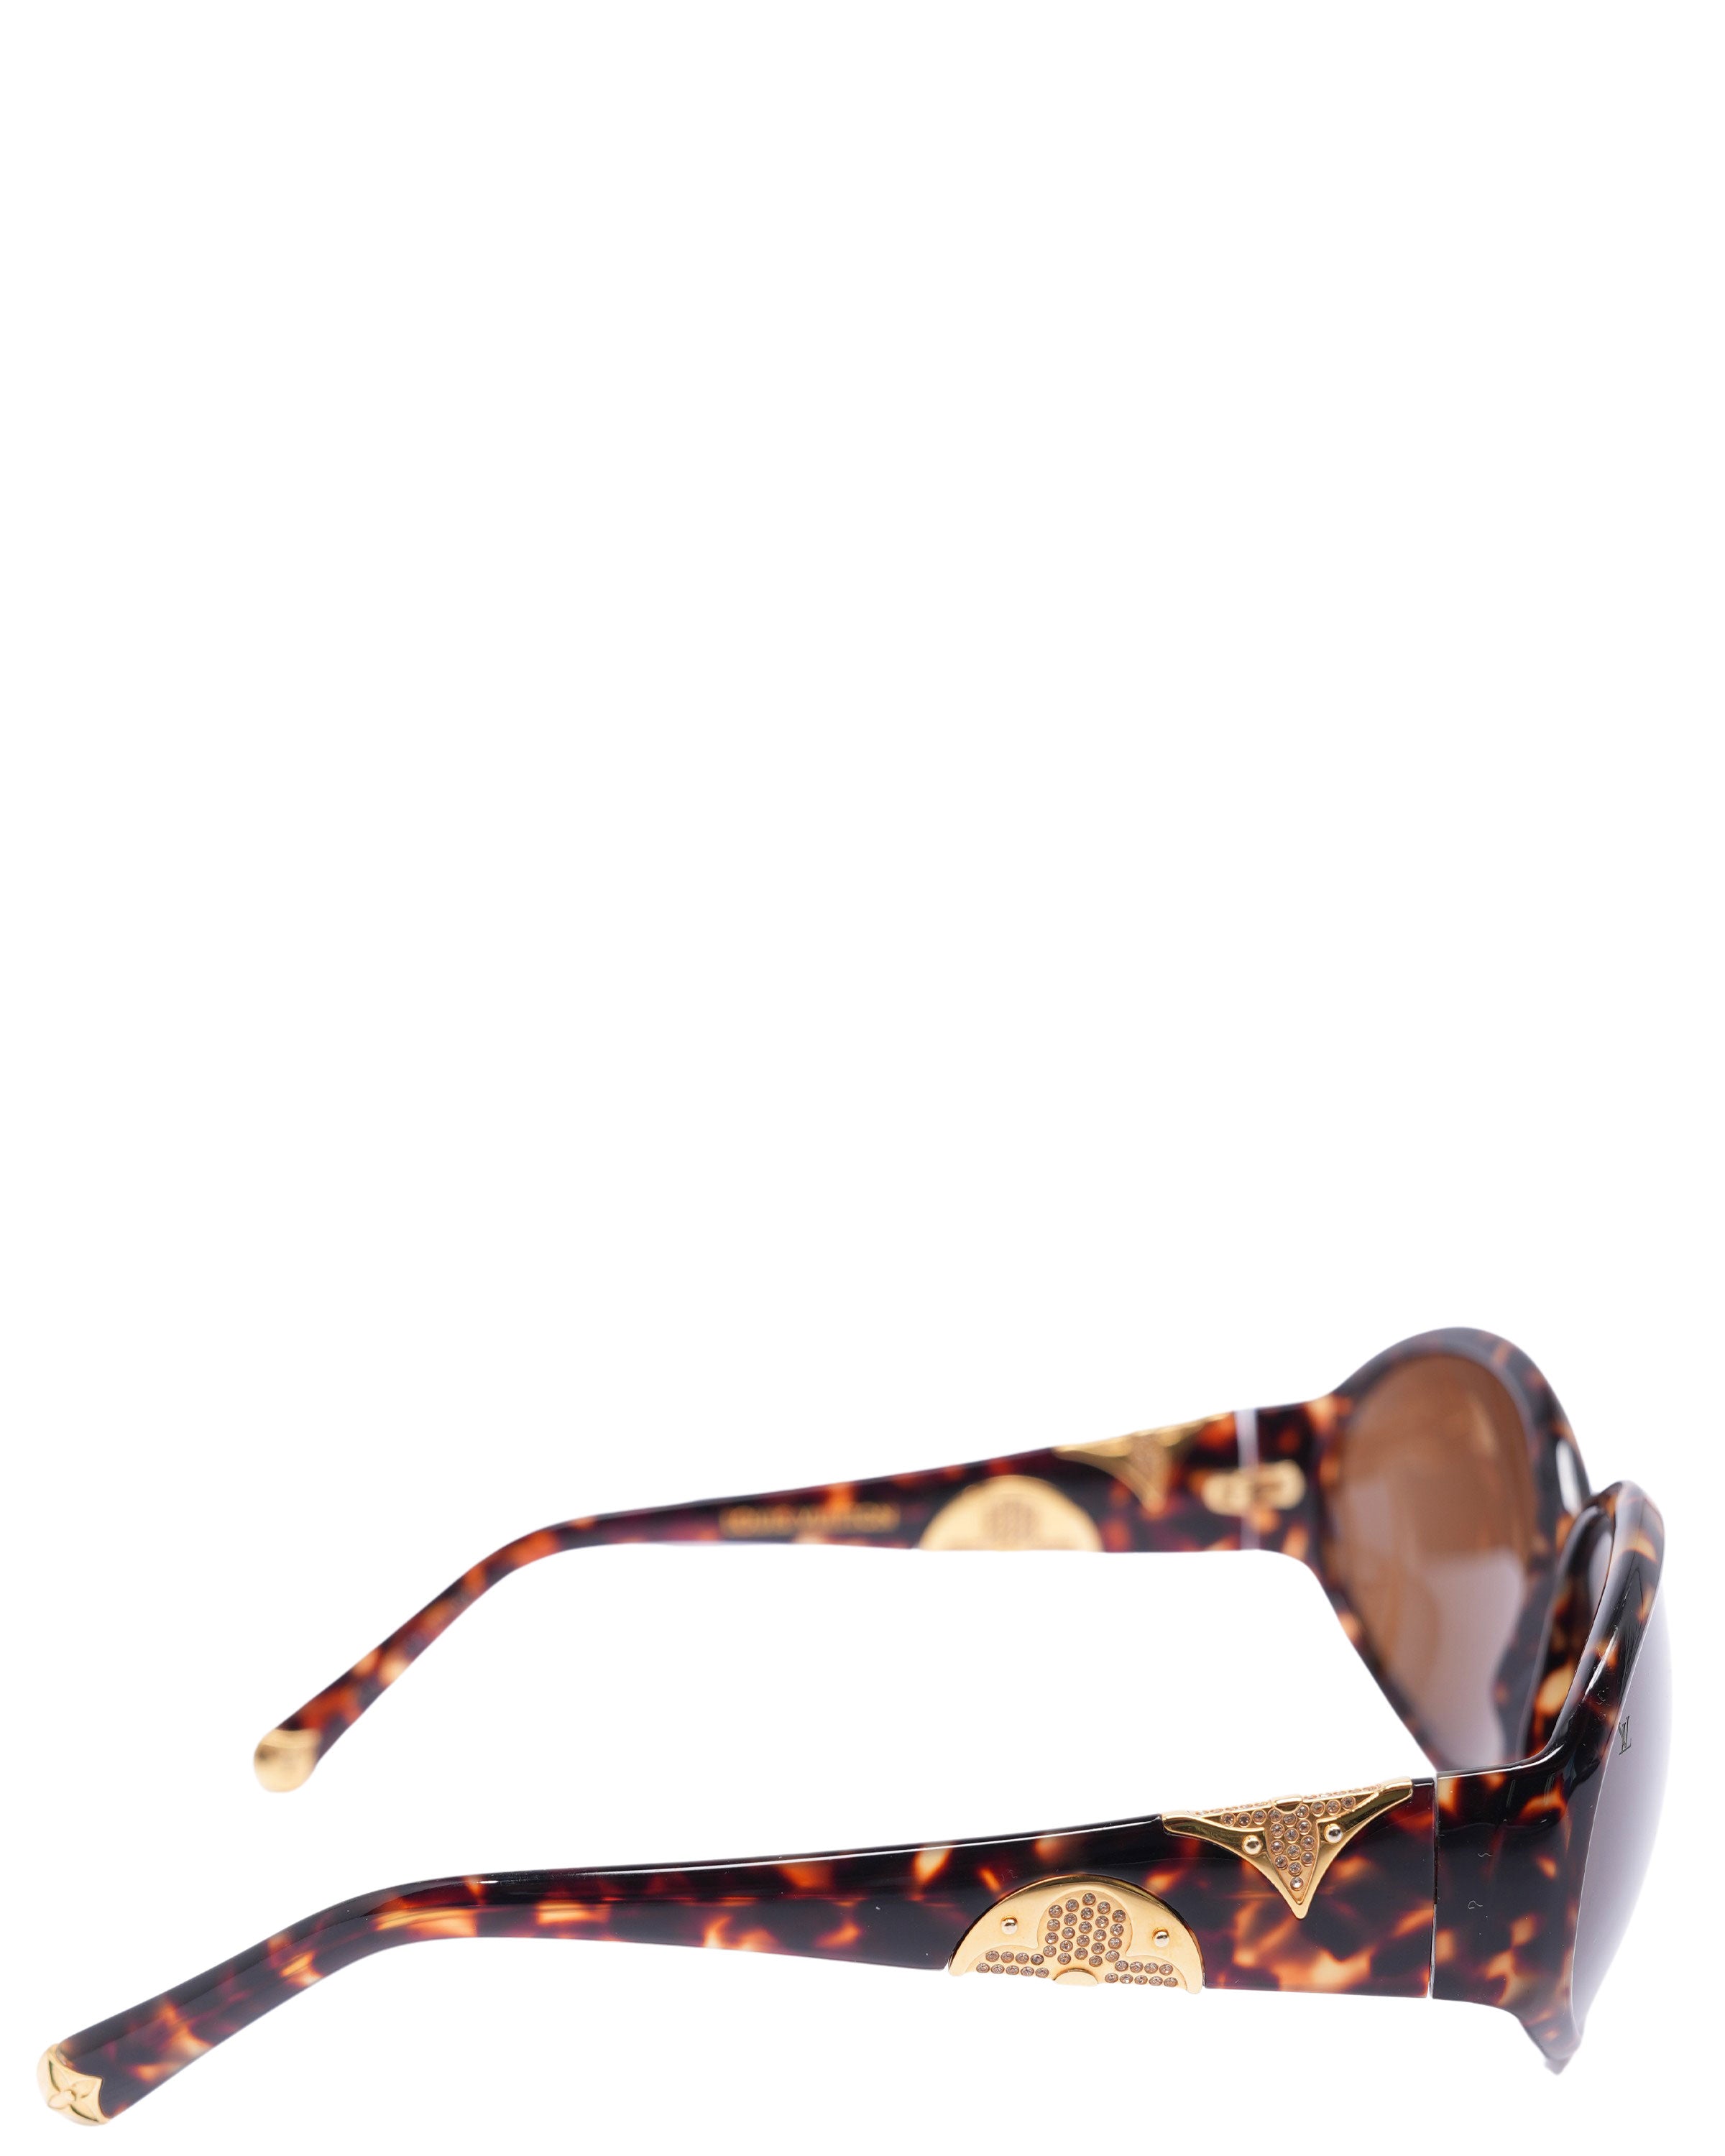 Iris Sunglasses